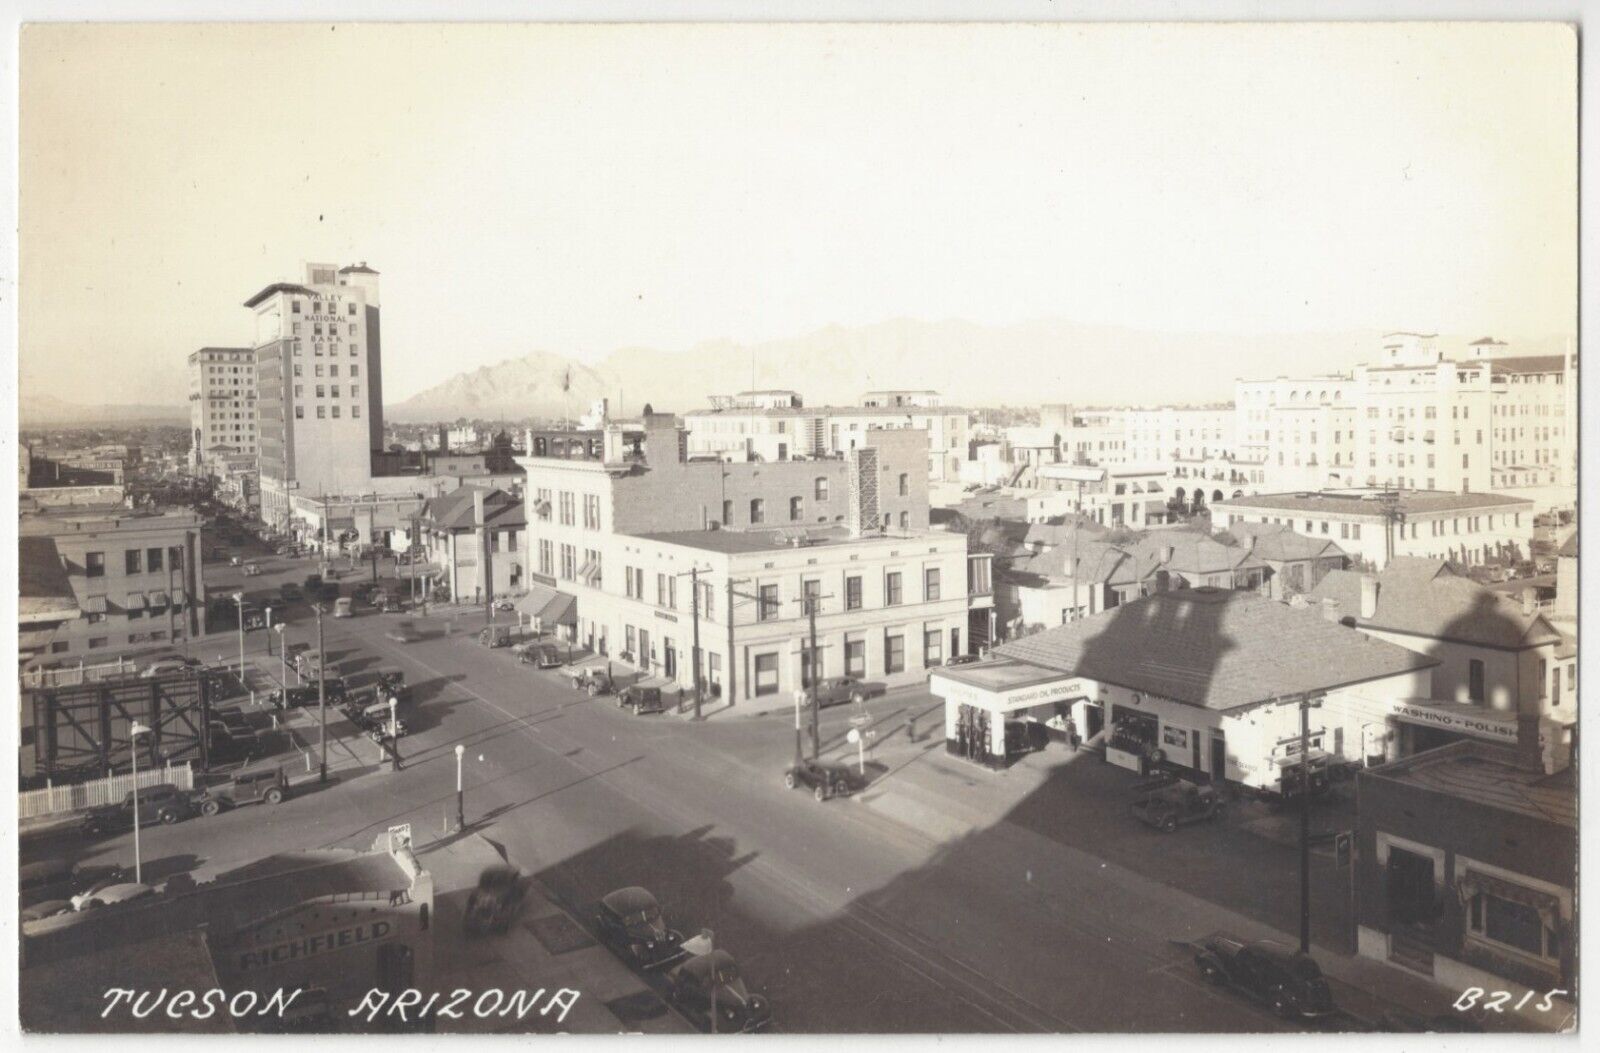 1940 Tucson, Arizona - REAL PHOTO Downtown Street Scene - Vintage Postcard